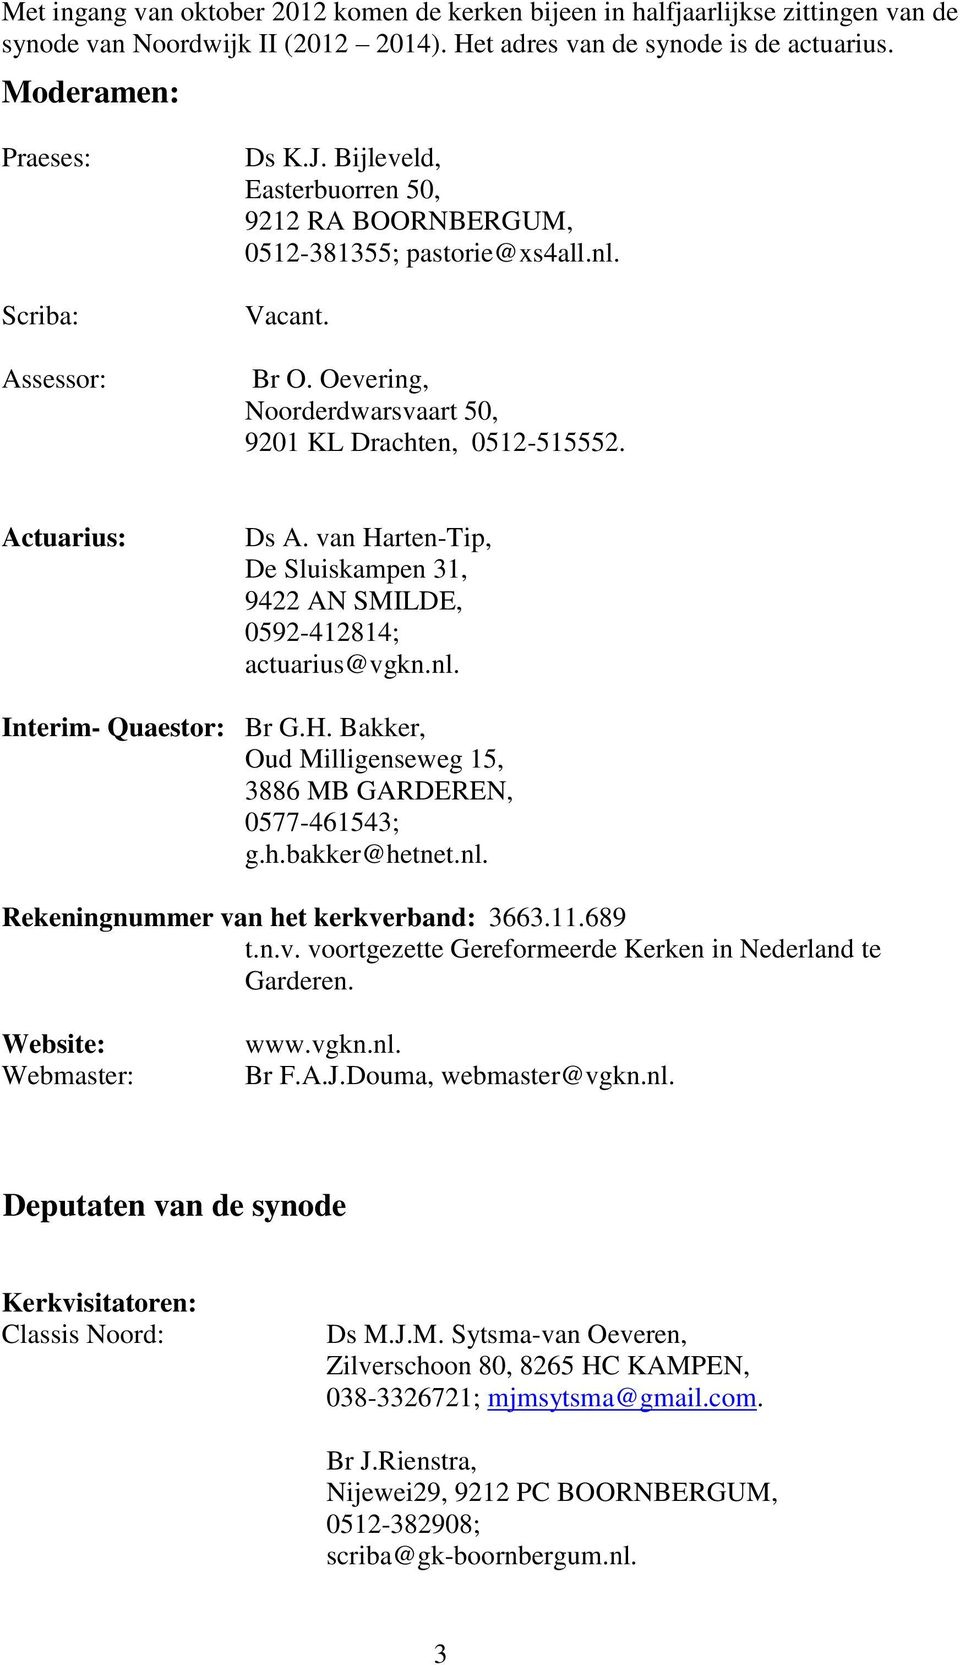 Actuarius: De Sluiskampen 31, 9422 AN SMILDE, 0592-412814; actuarius@vgkn.nl. Interim- Quaestor: Br G.H. Bakker, Oud Milligenseweg 15, 3886 MB GARDEREN, 0577-461543; g.h.bakker@hetnet.nl. Rekeningnummer van het kerkverband: 3663.